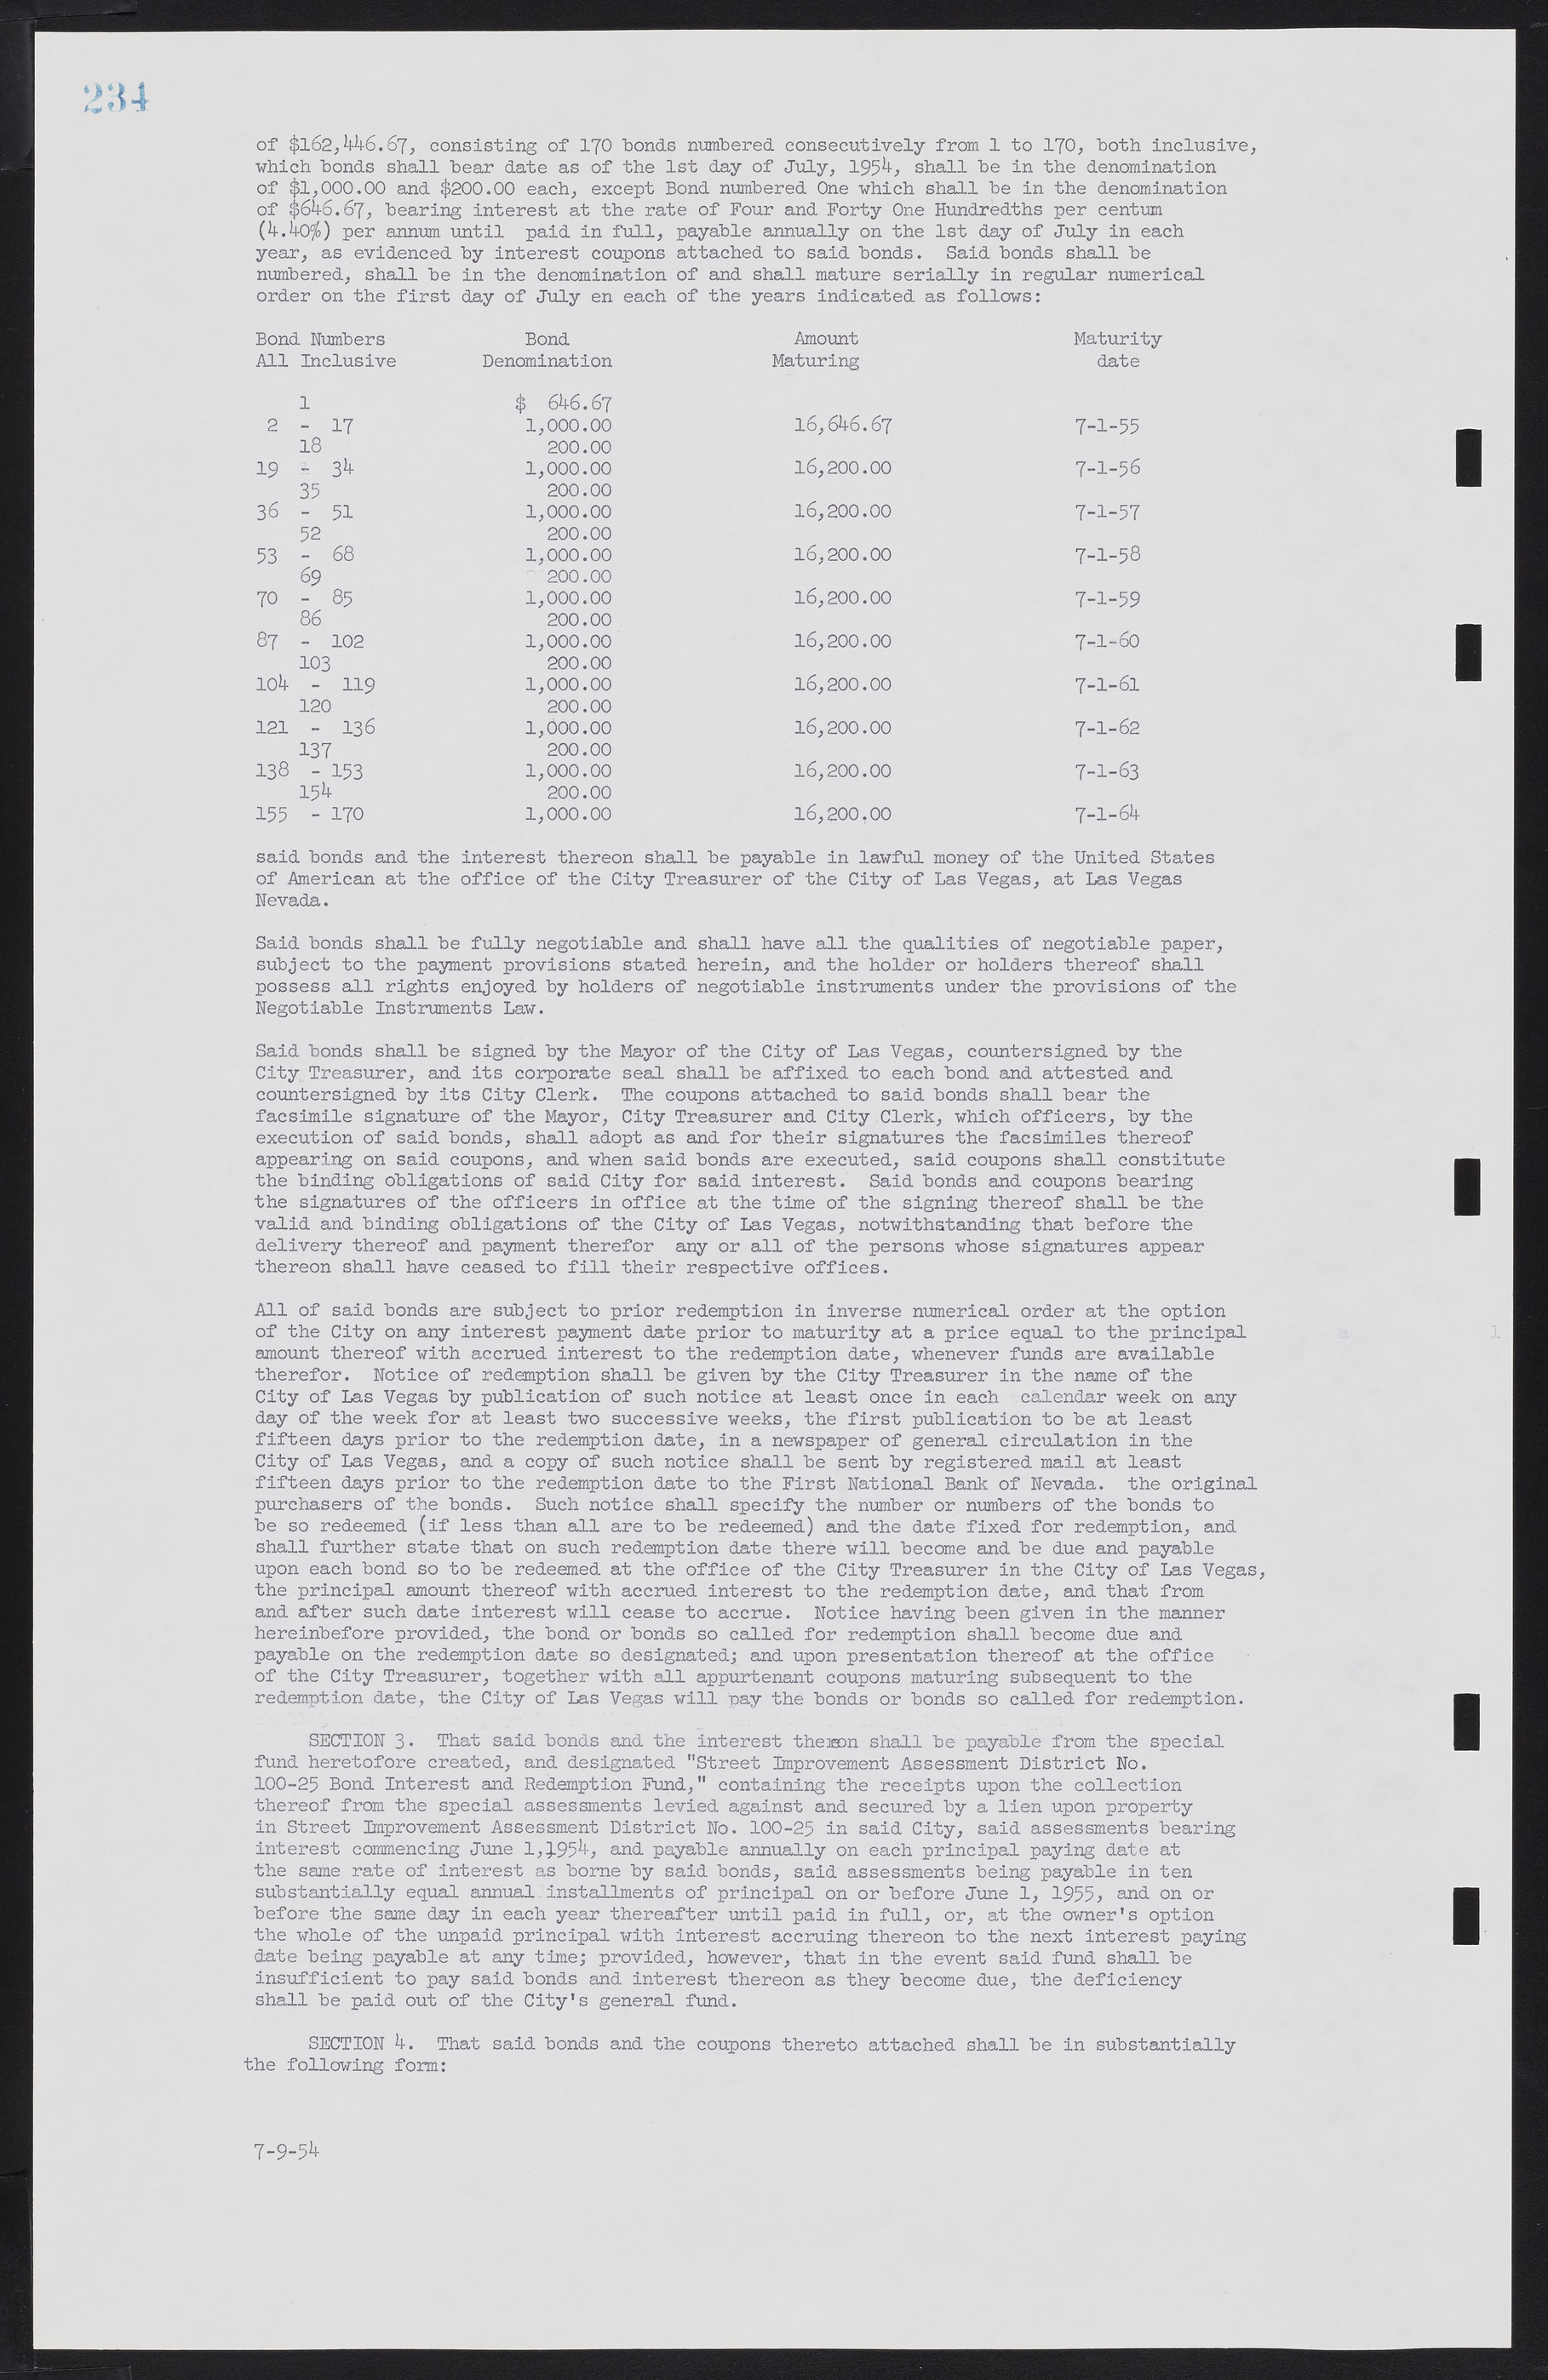 Las Vegas City Commission Minutes, February 17, 1954 to September 21, 1955, lvc000009-240